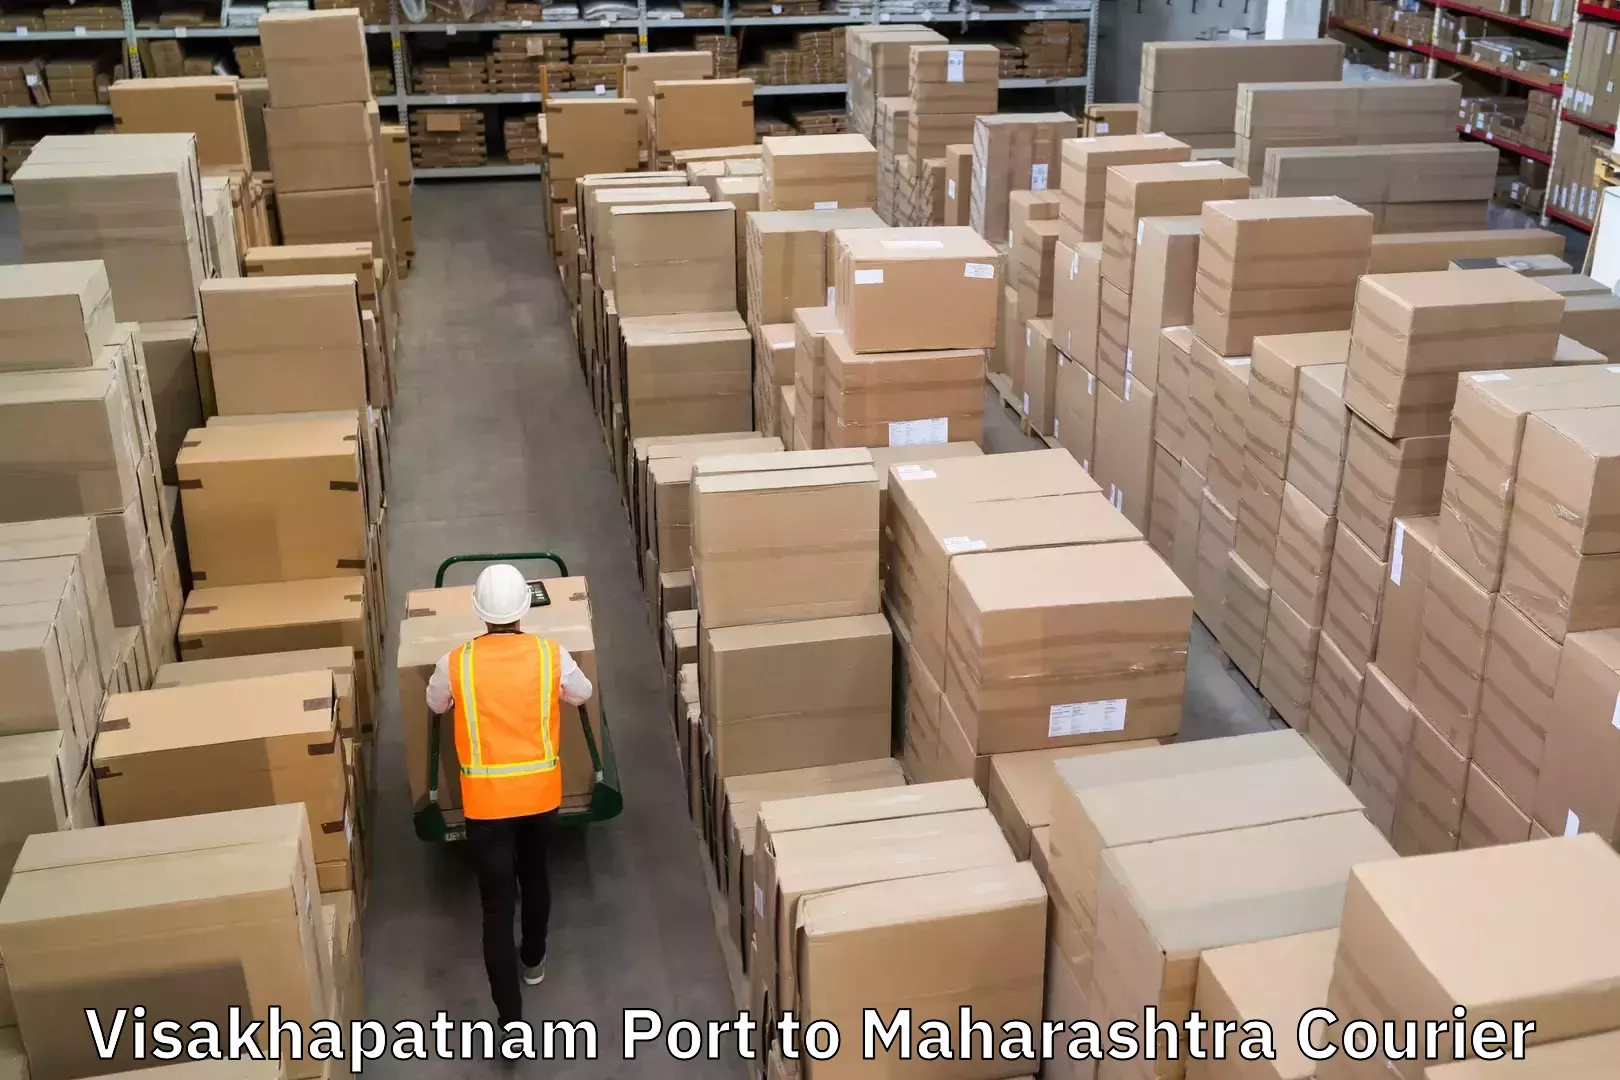 Express mail service Visakhapatnam Port to Maharashtra